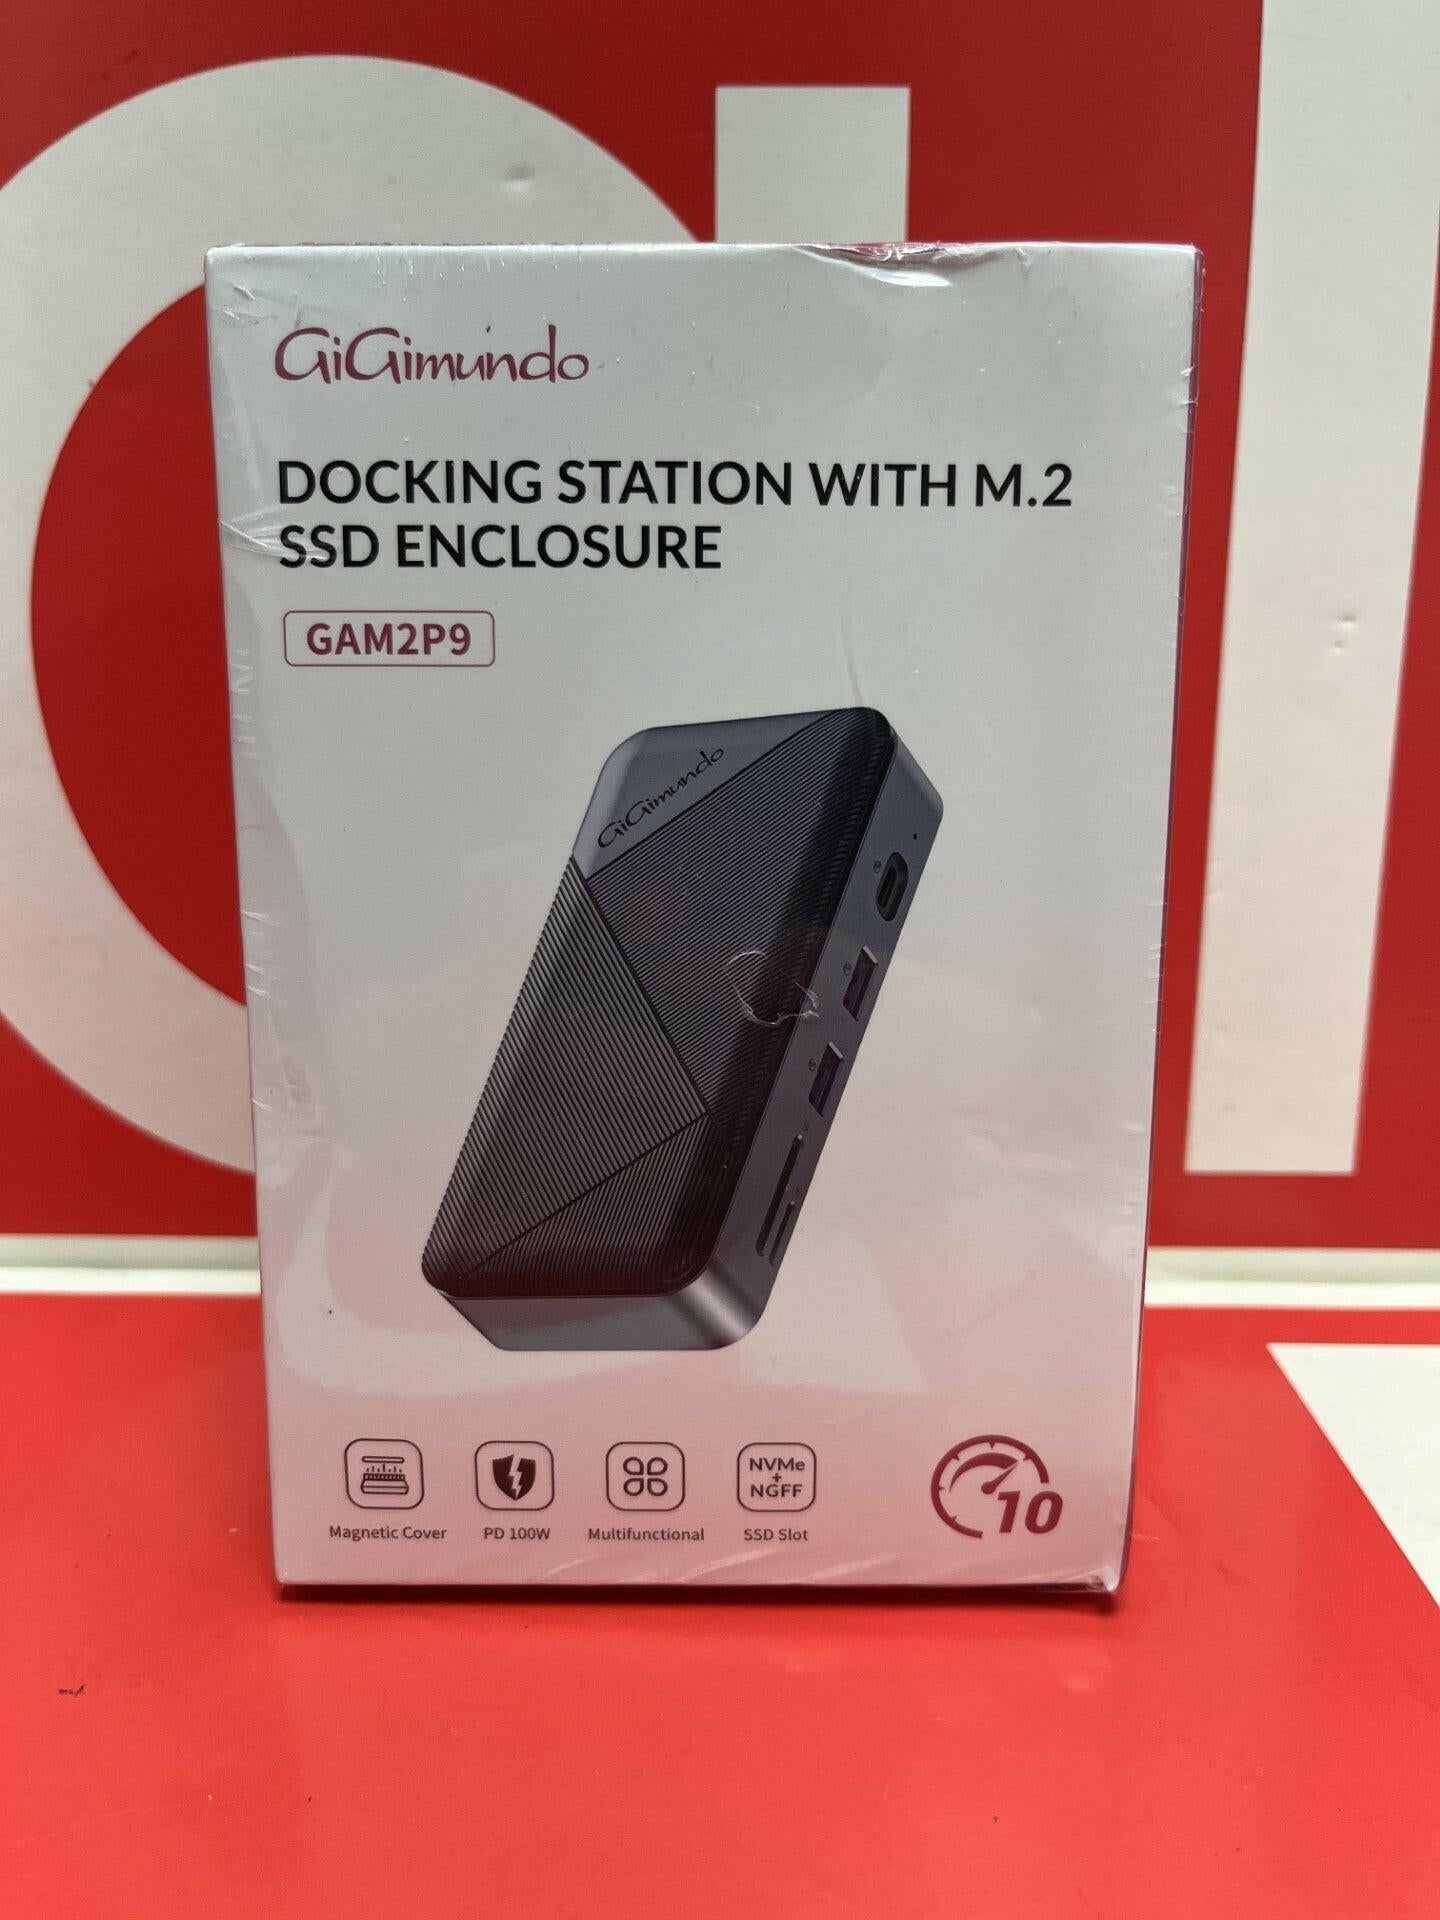 GiGimundo Docking Station With M.2 SSD Enclosure